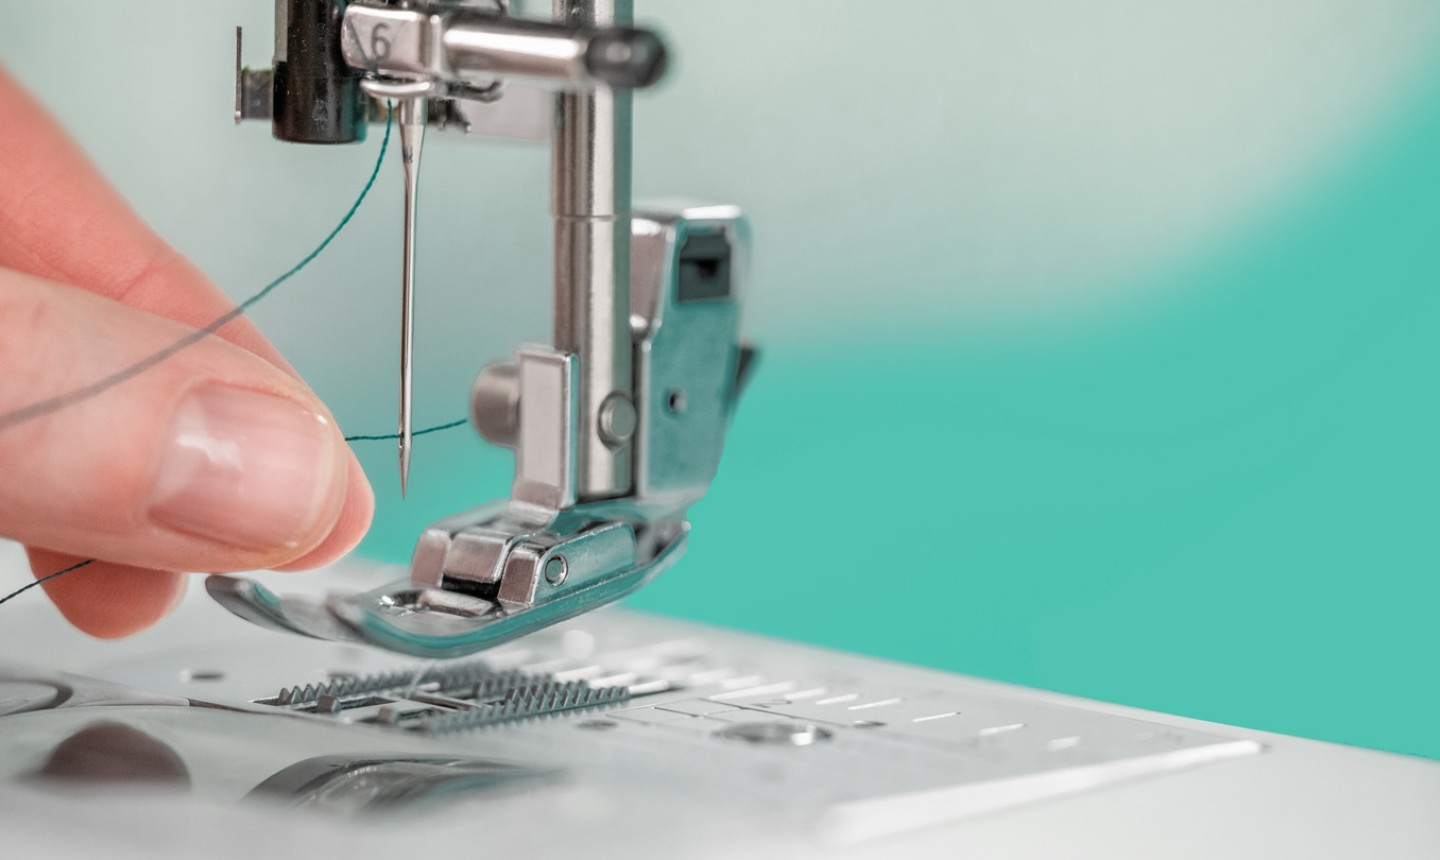 tune up sewing machine singer facilitates